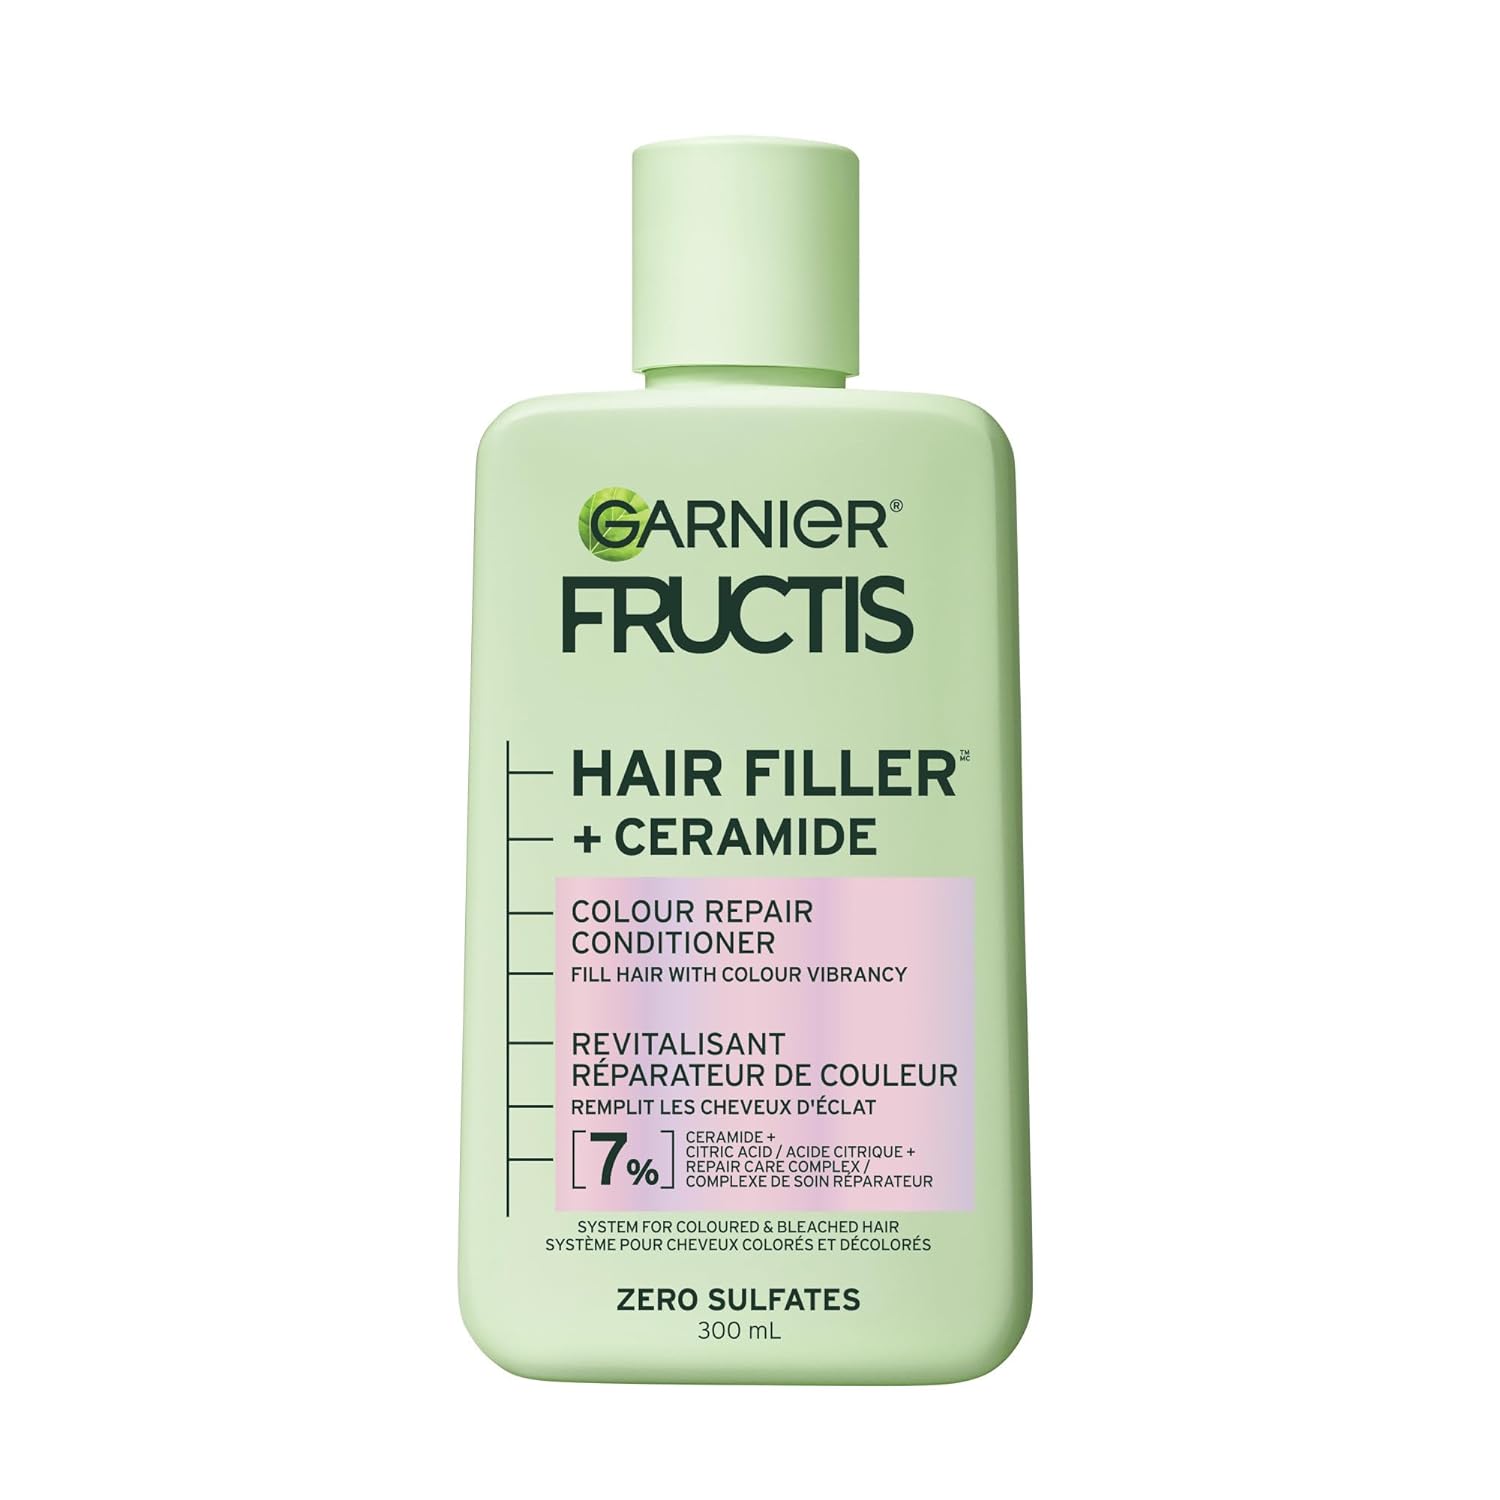 Garnier Fructis Hair Filler Color Repair Conditioner with Ceramide, 10.1 FL OZ, 1 Count